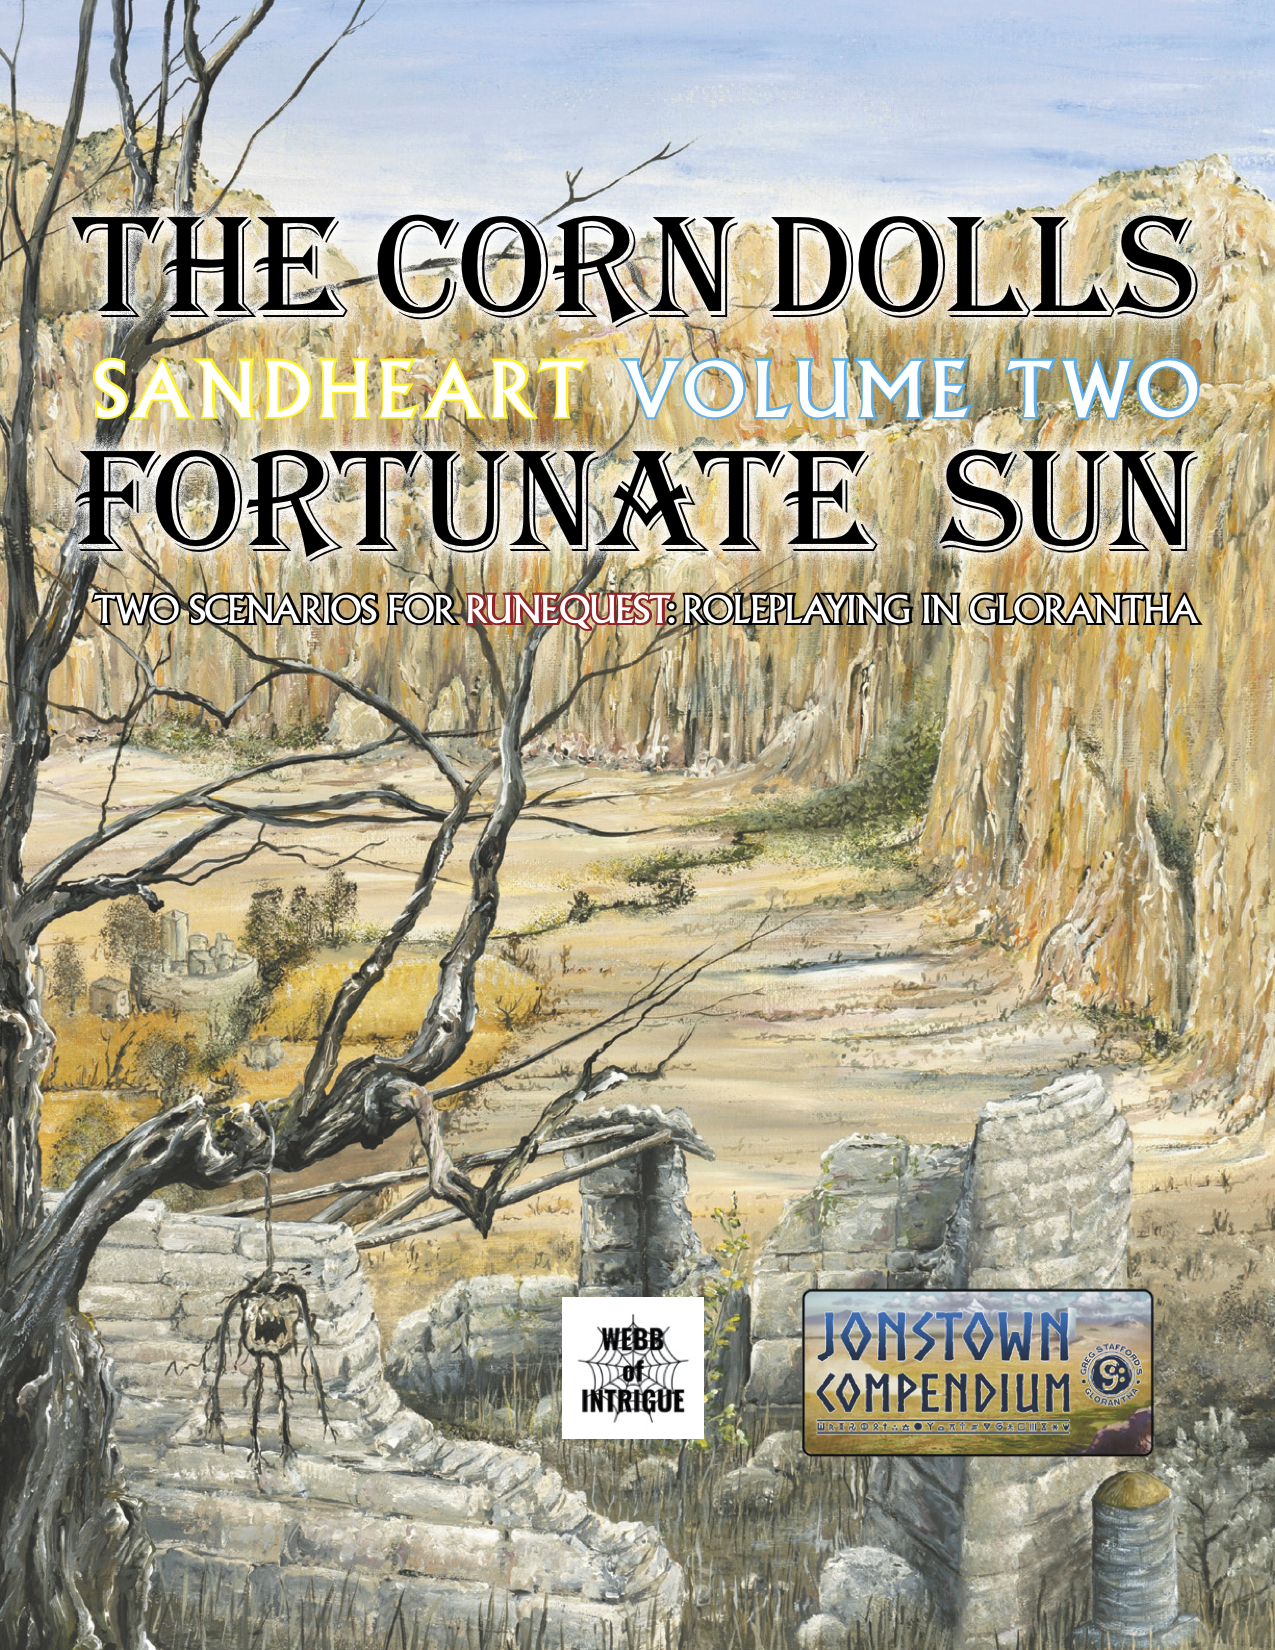 The Corn Dolls and Fortunate Sun: Sandheart Vol 2, Jonstown Compendium